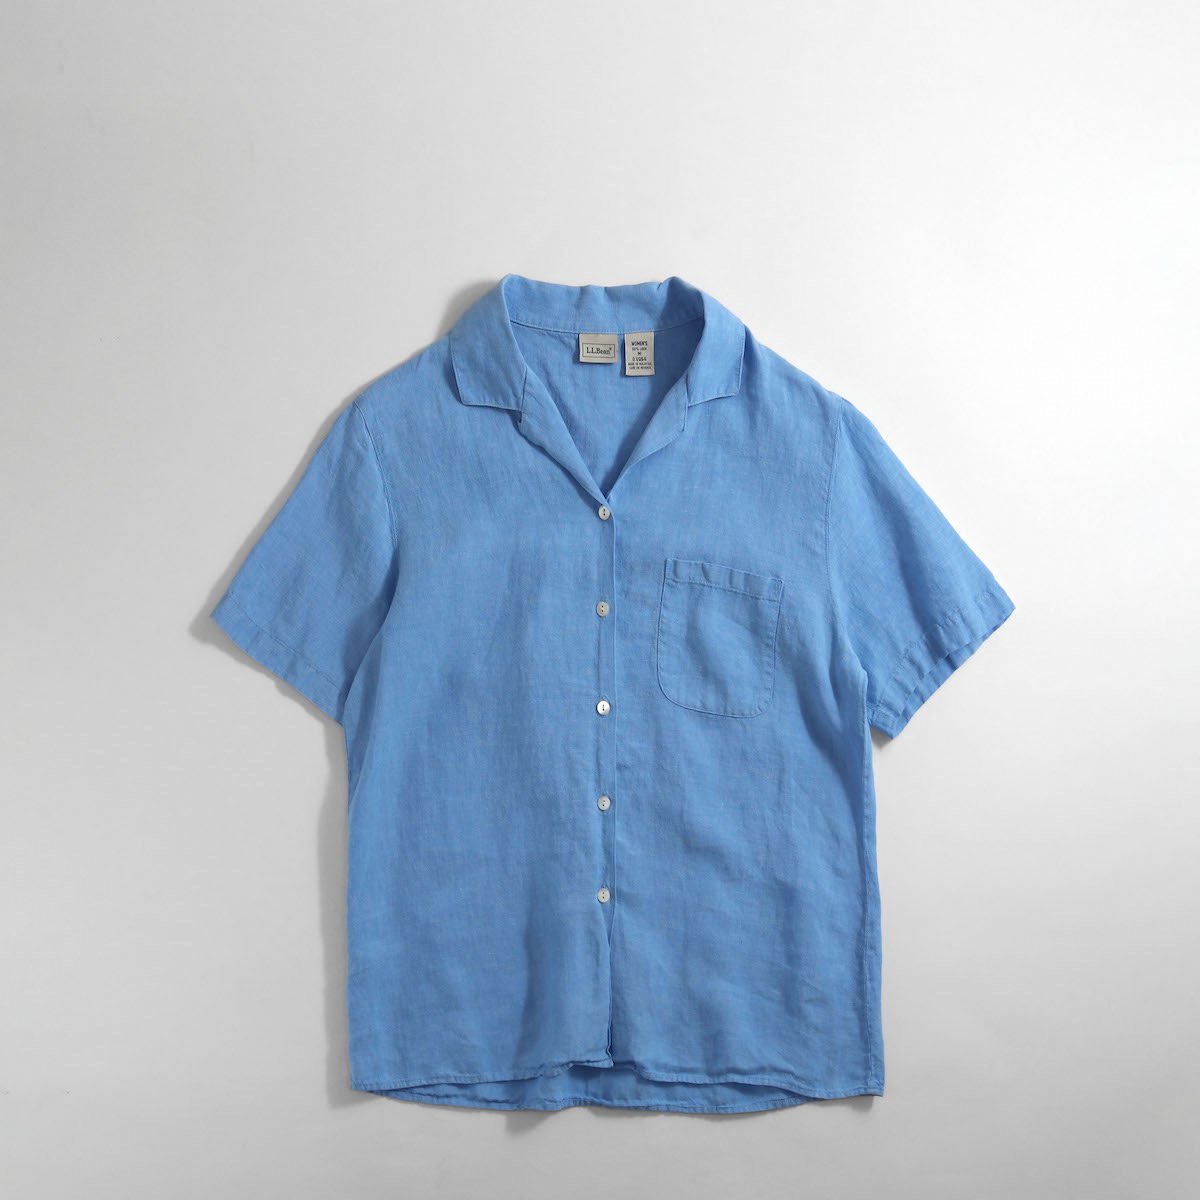 20%OFF [レディース] LLビーン リネン オープンカラーシャツ 半袖